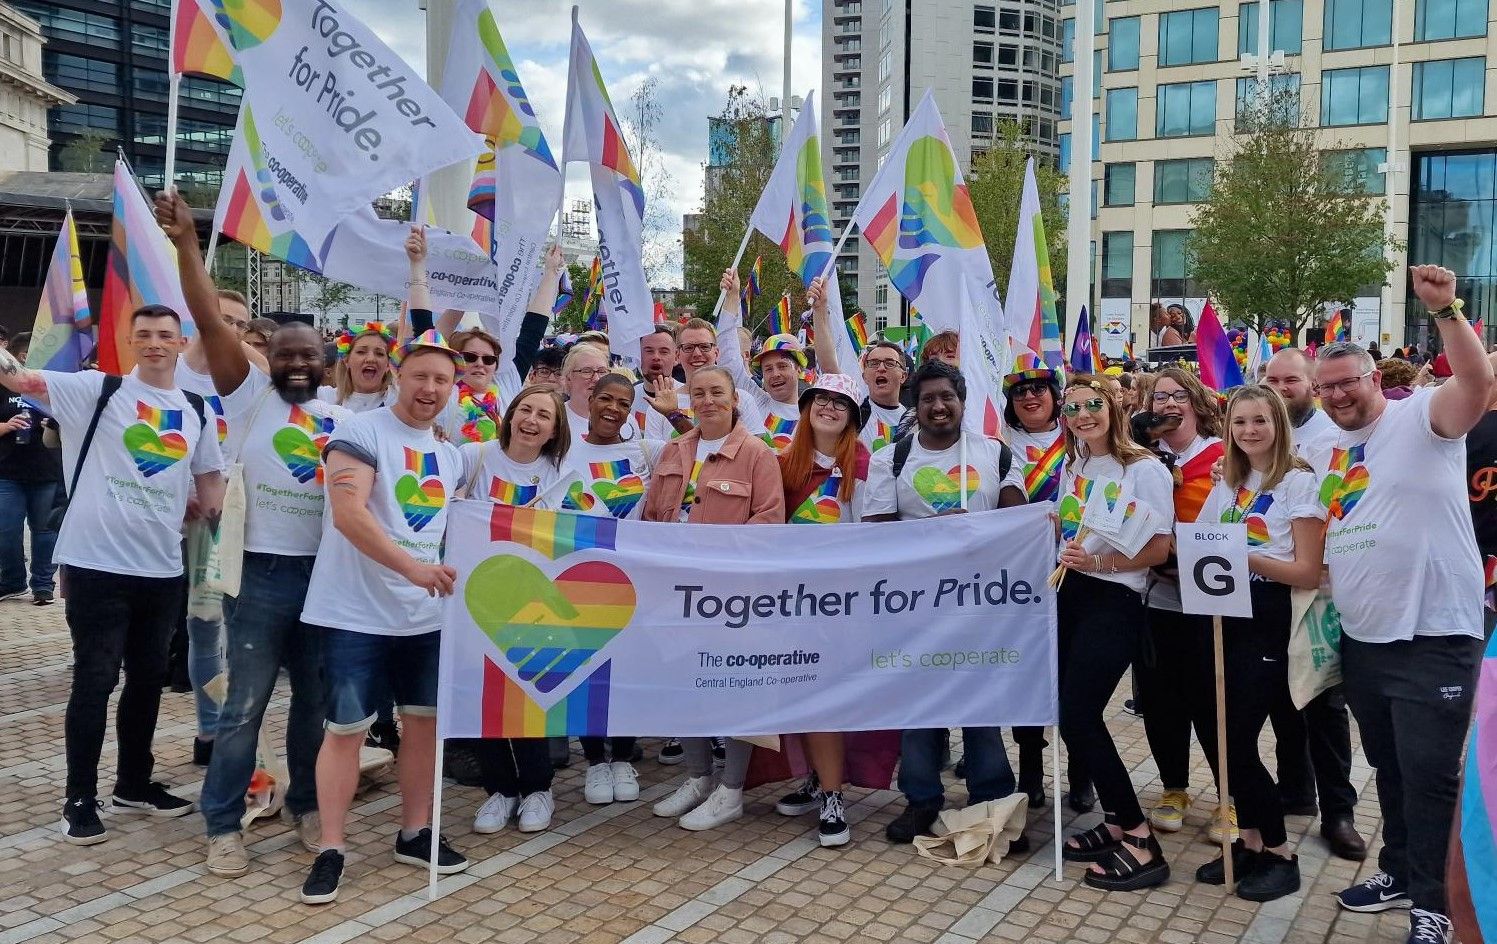 Colleagues celebrate Birmingham Pride